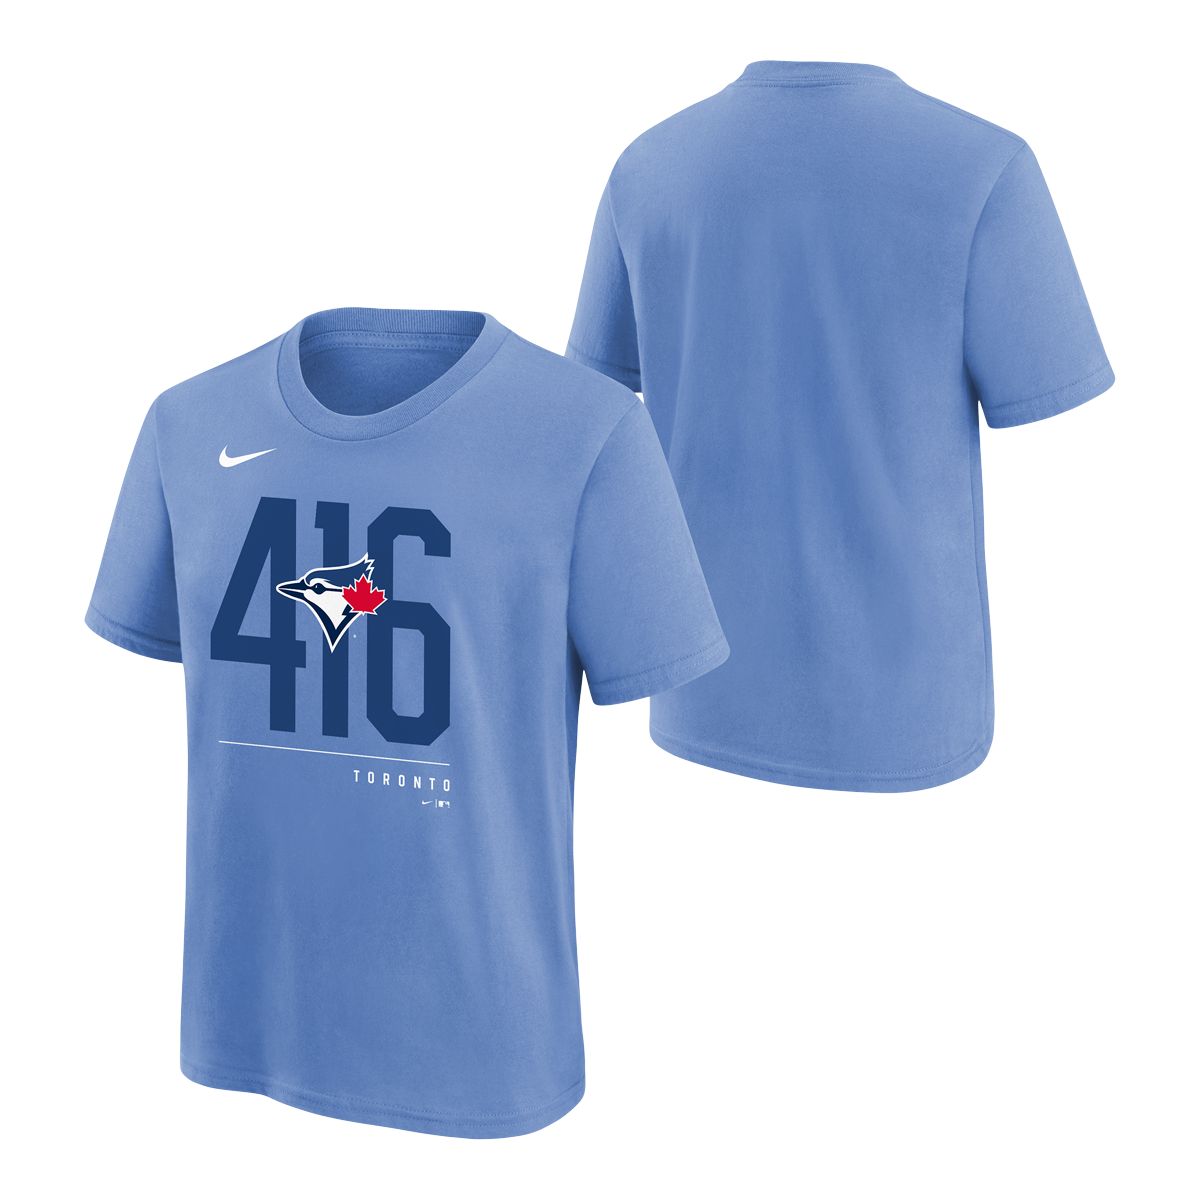 Toronto Blue Jays Nike Women's Hyun-jin Ryu T Shirt